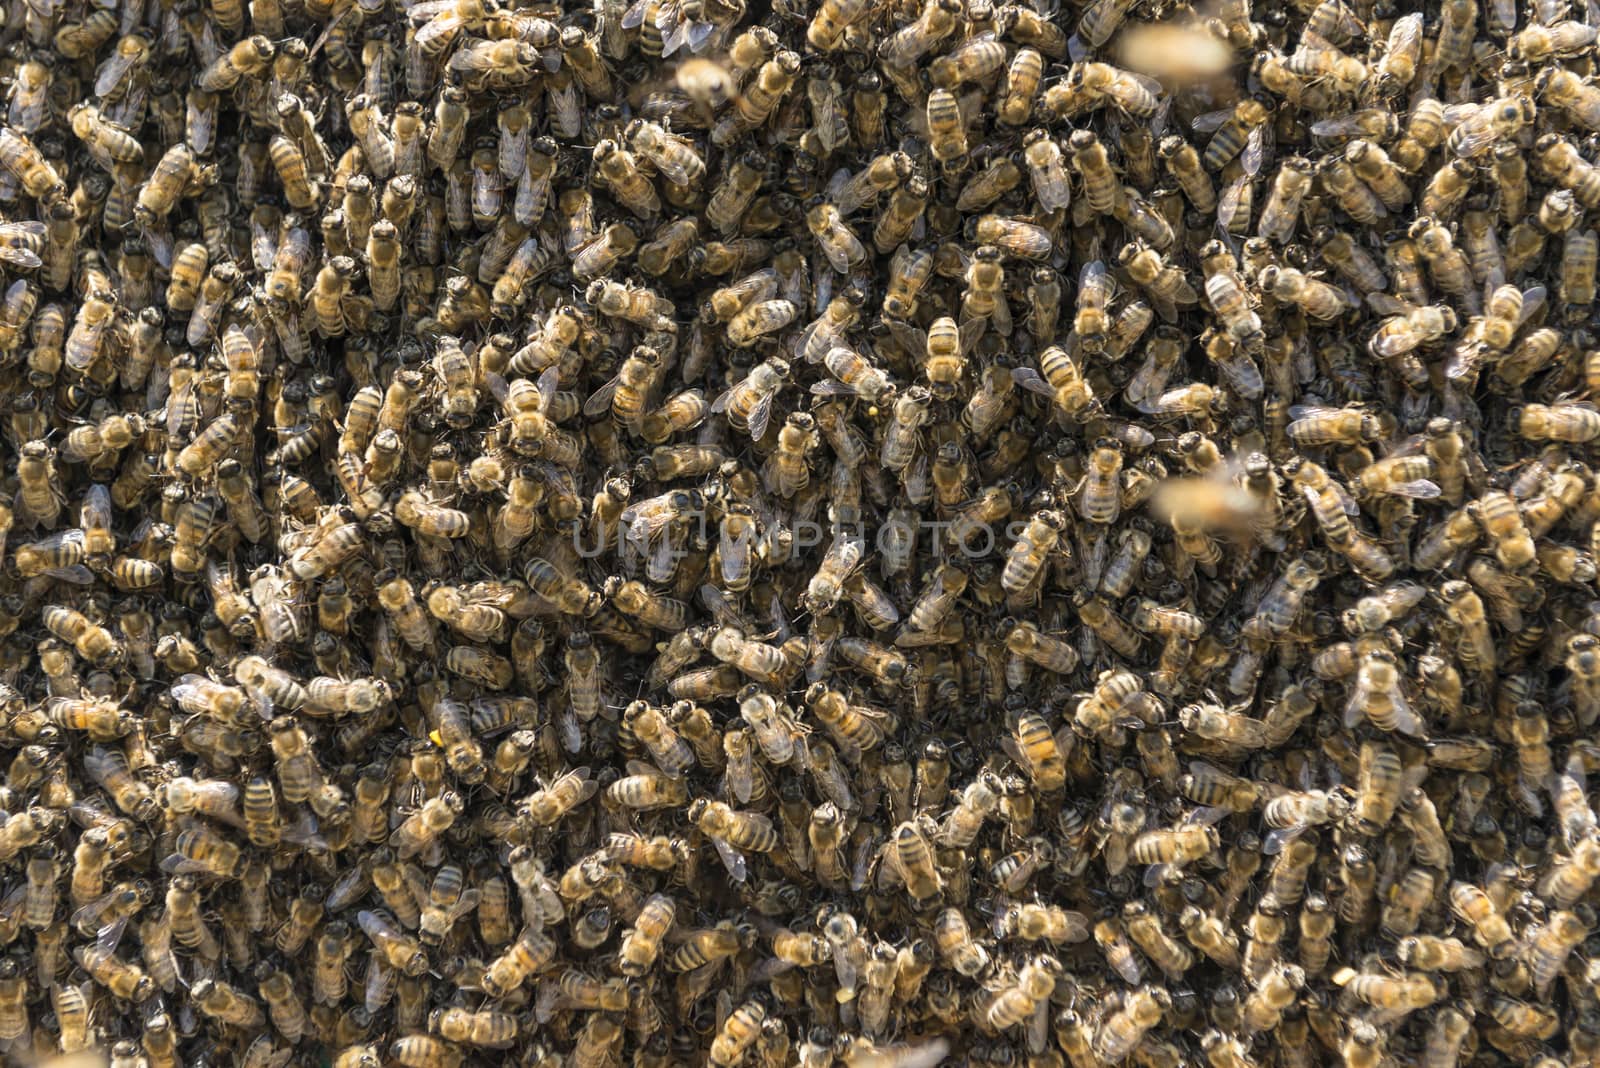 crowded bee colony populations by crazymedia007